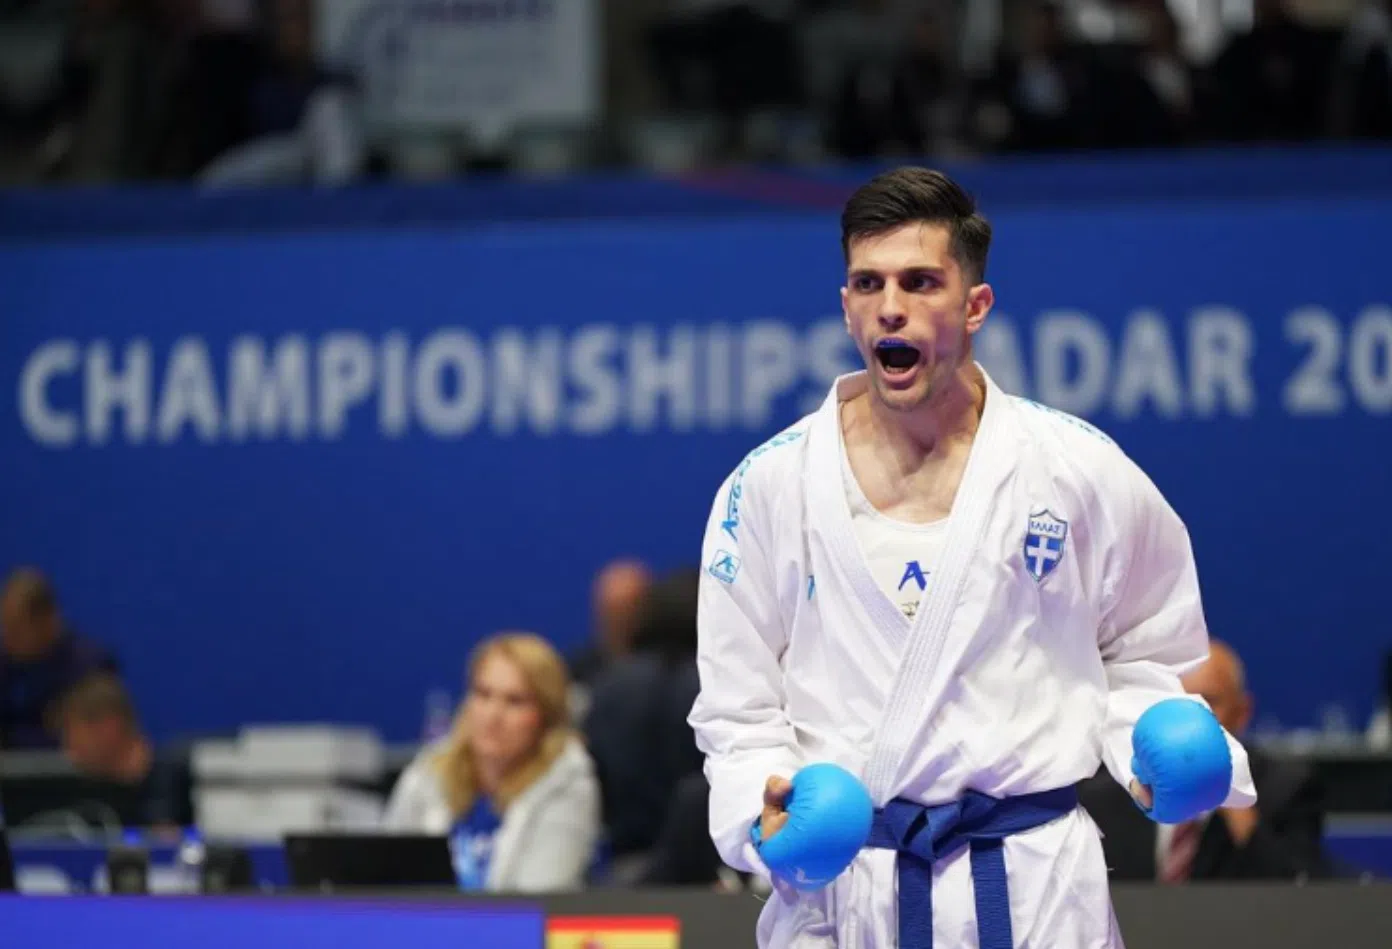 Greek athlete Konstantinos Mastrogiannis wins gold in European karate championships. Credit Konstantinos Mastrogiannis Instagram